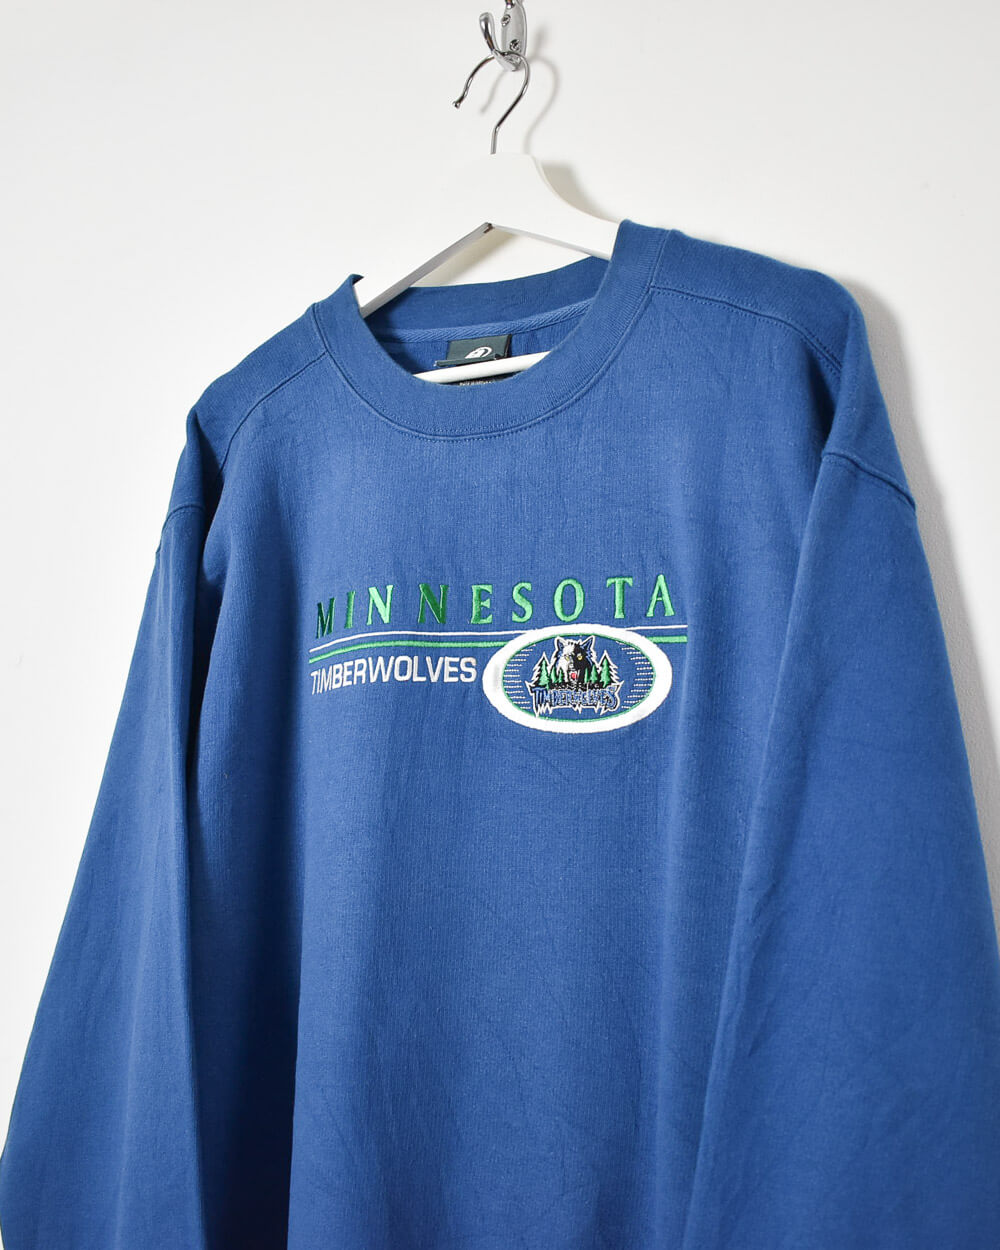 Active Minnesota Timberwolves Sweatshirt - X-Large - Domno Vintage 90s, 80s, 00s Retro and Vintage Clothing 